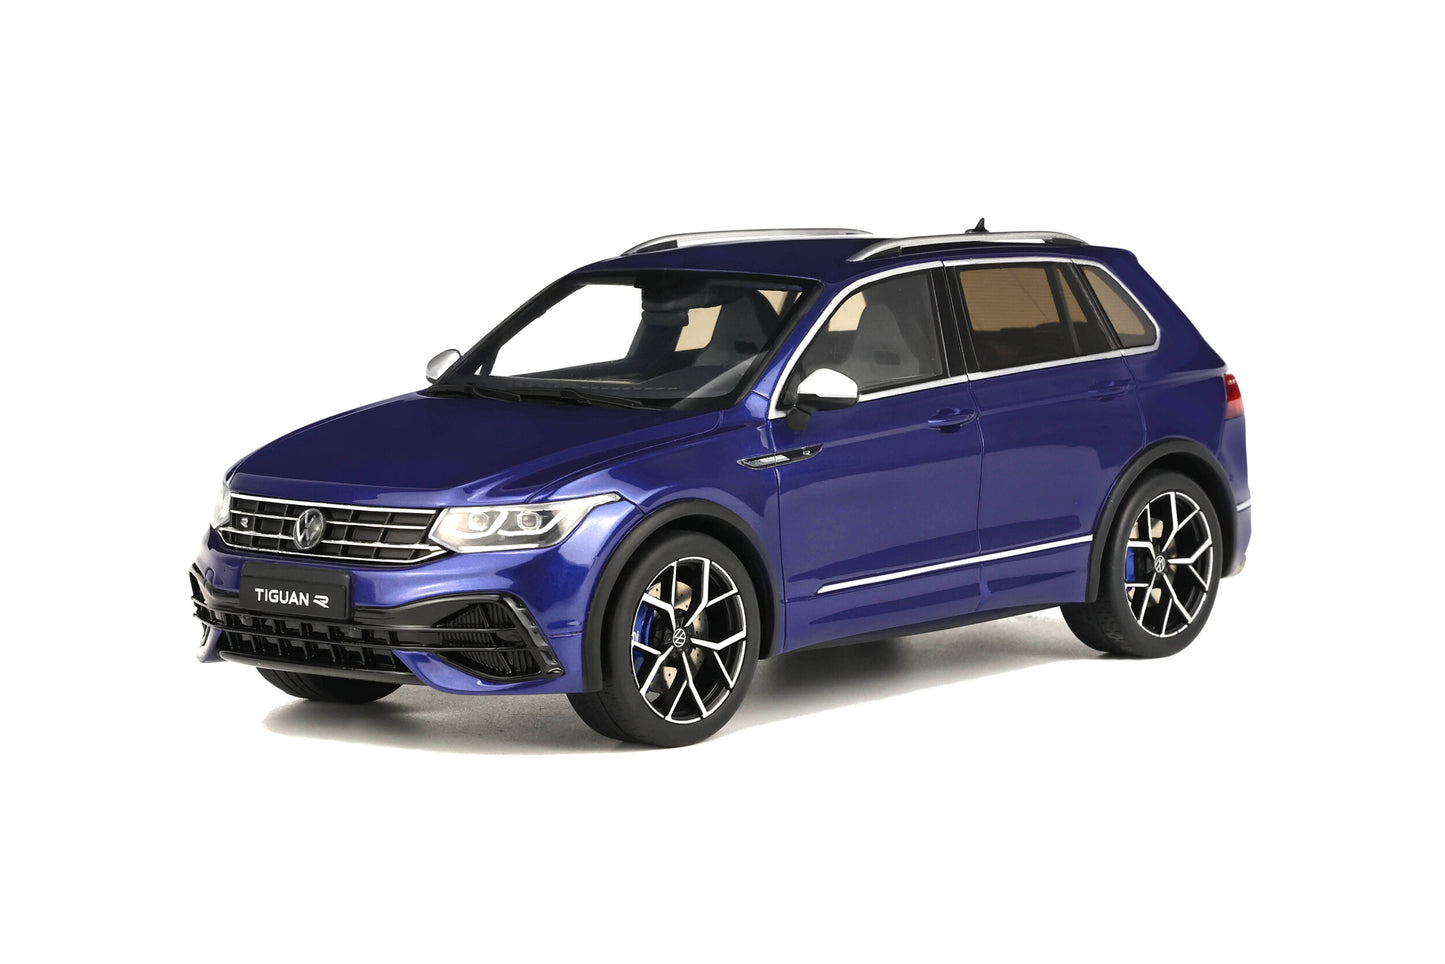 OttOmobile - Volkswagen Tiguan R (Lapiz Blue Metallic) 1:18 Scale Scale Model